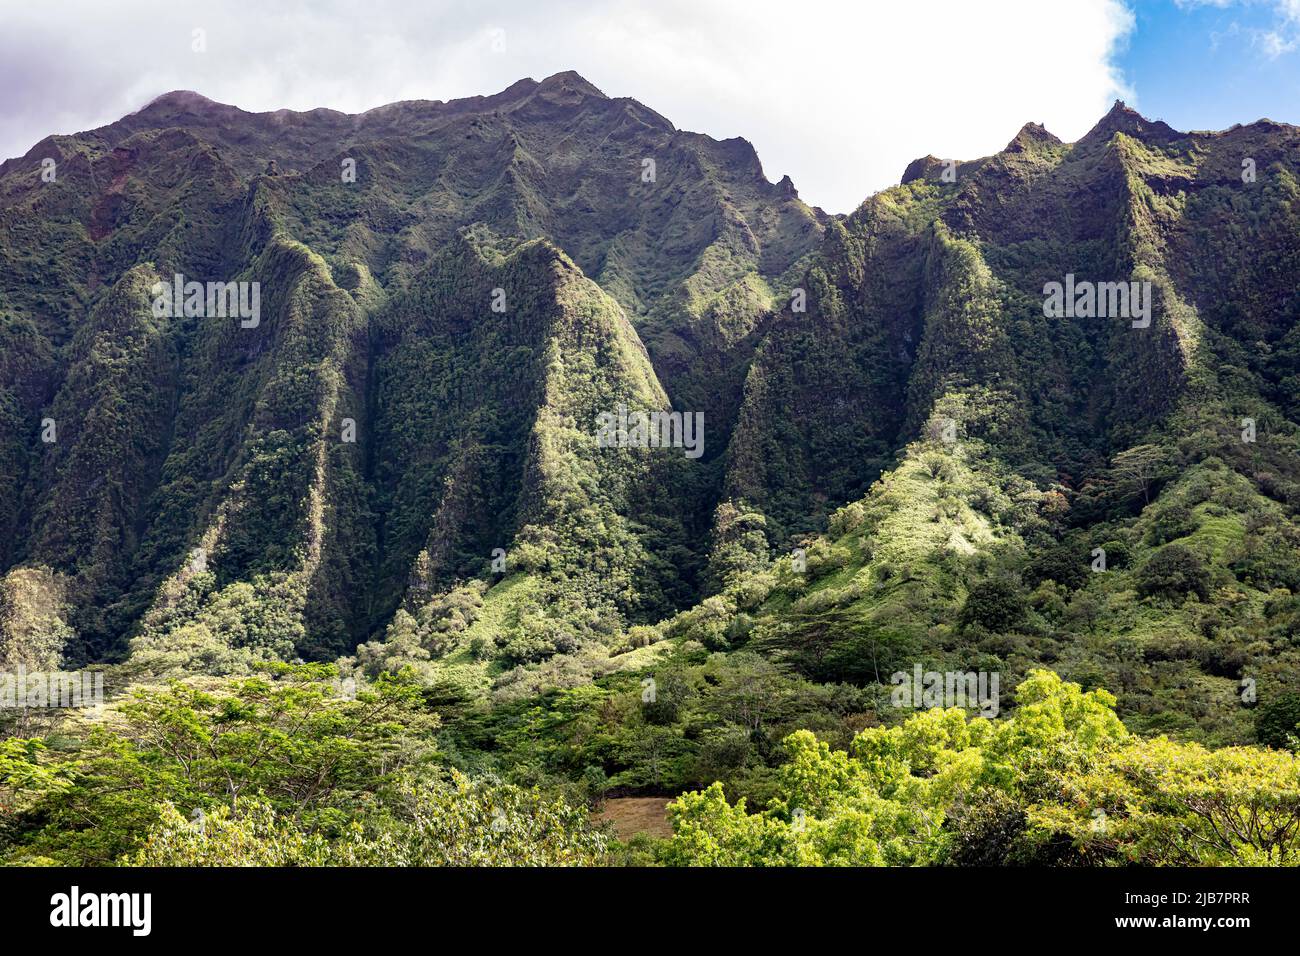 Steep volcanic mountains of Oahu, Hawaii Stock Photo